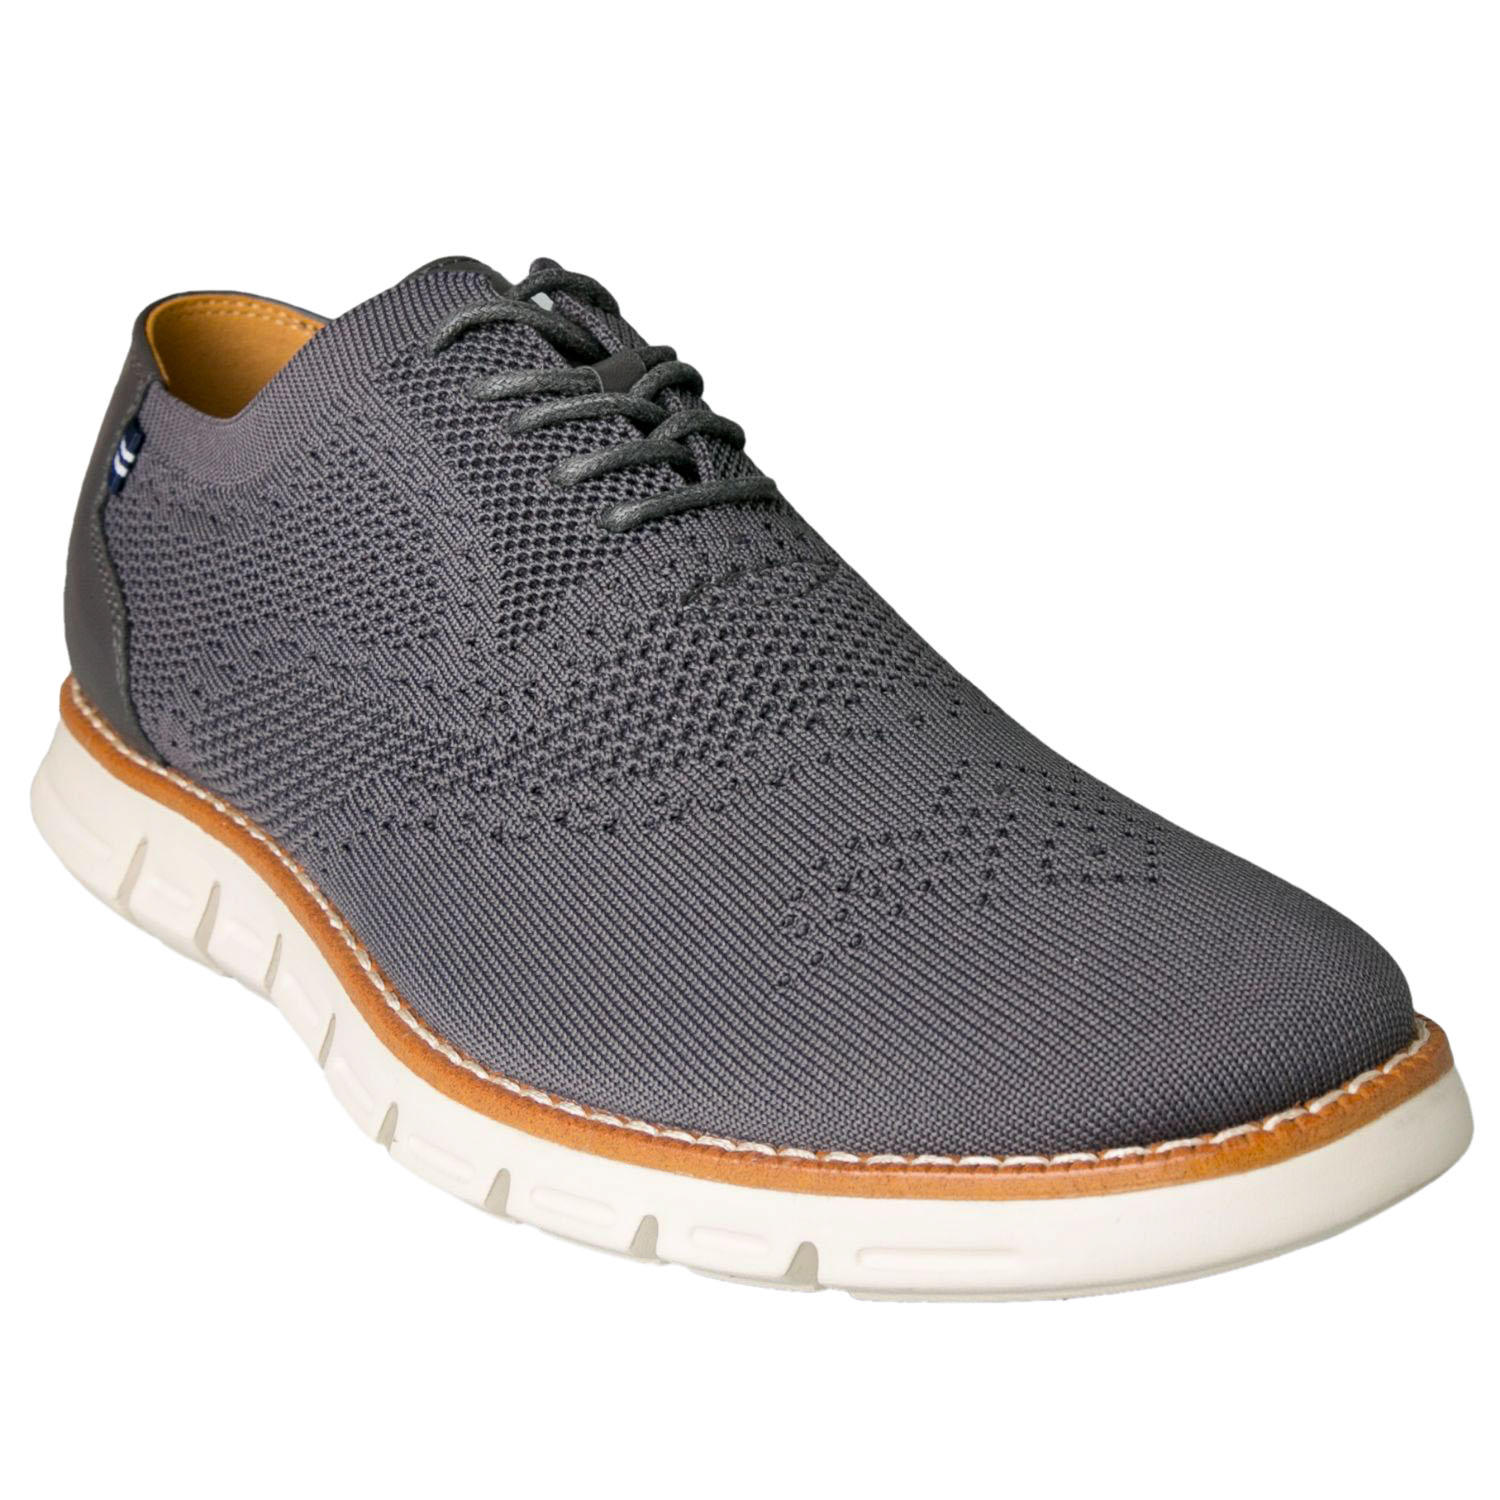 Nautica Men's Casual Oxford Shoe, Grey, Size 10 | eBay